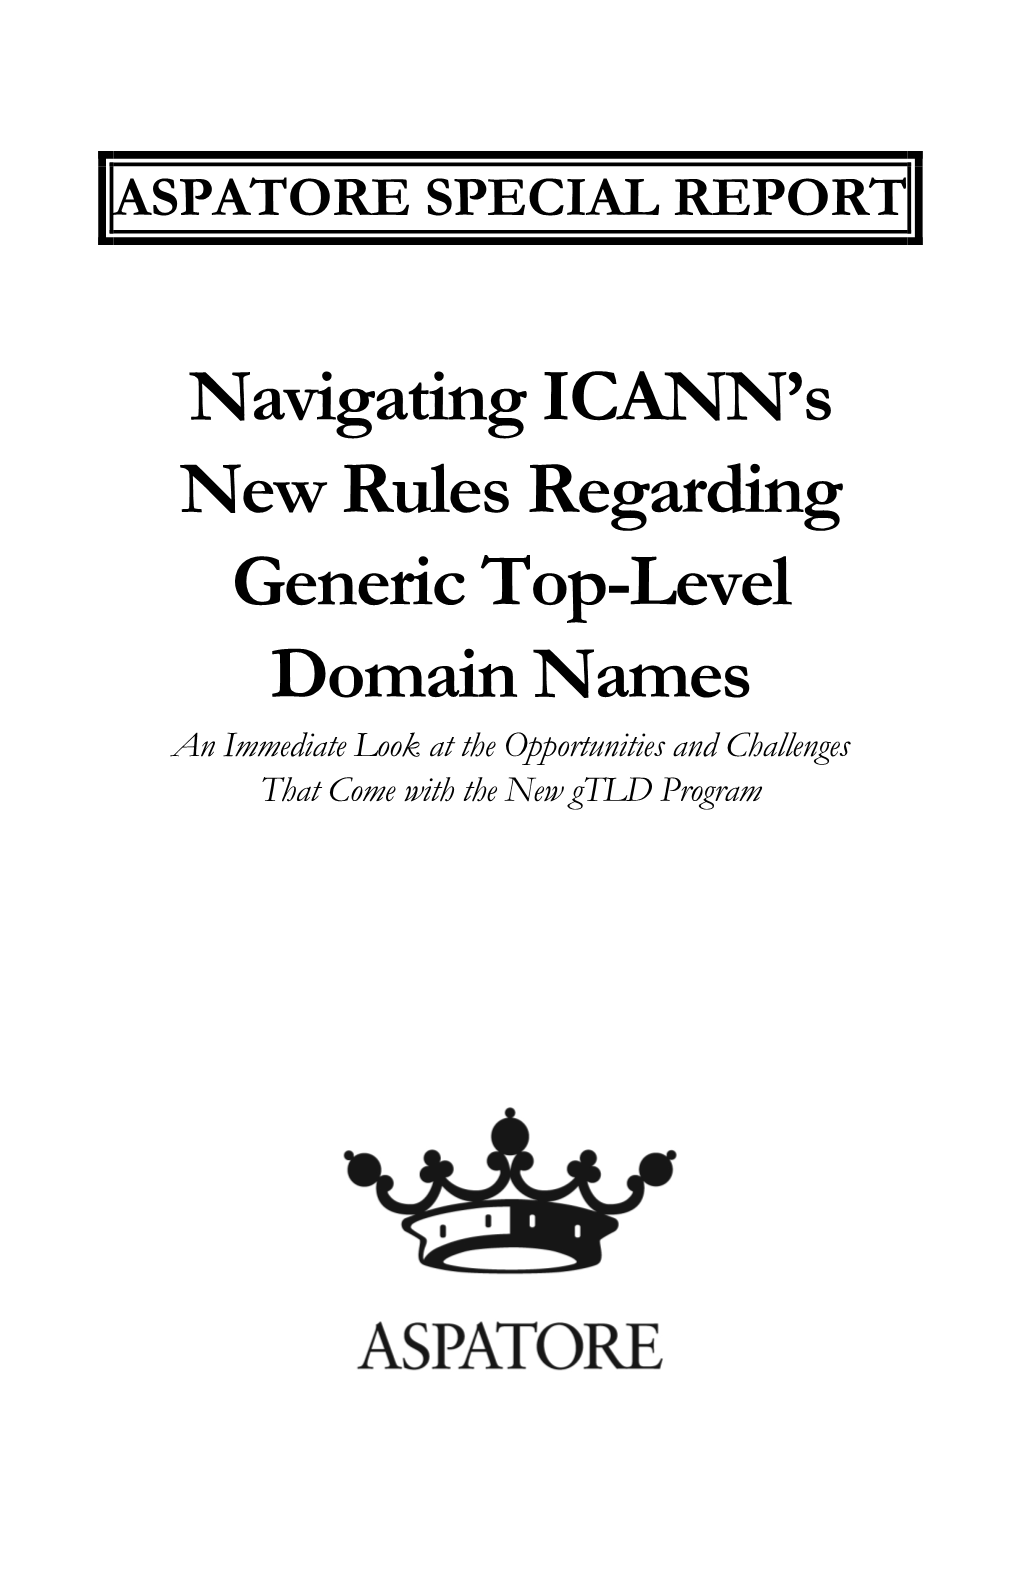 Navigating ICANN's New Rules Regarding Generic Top-Level Domain Names